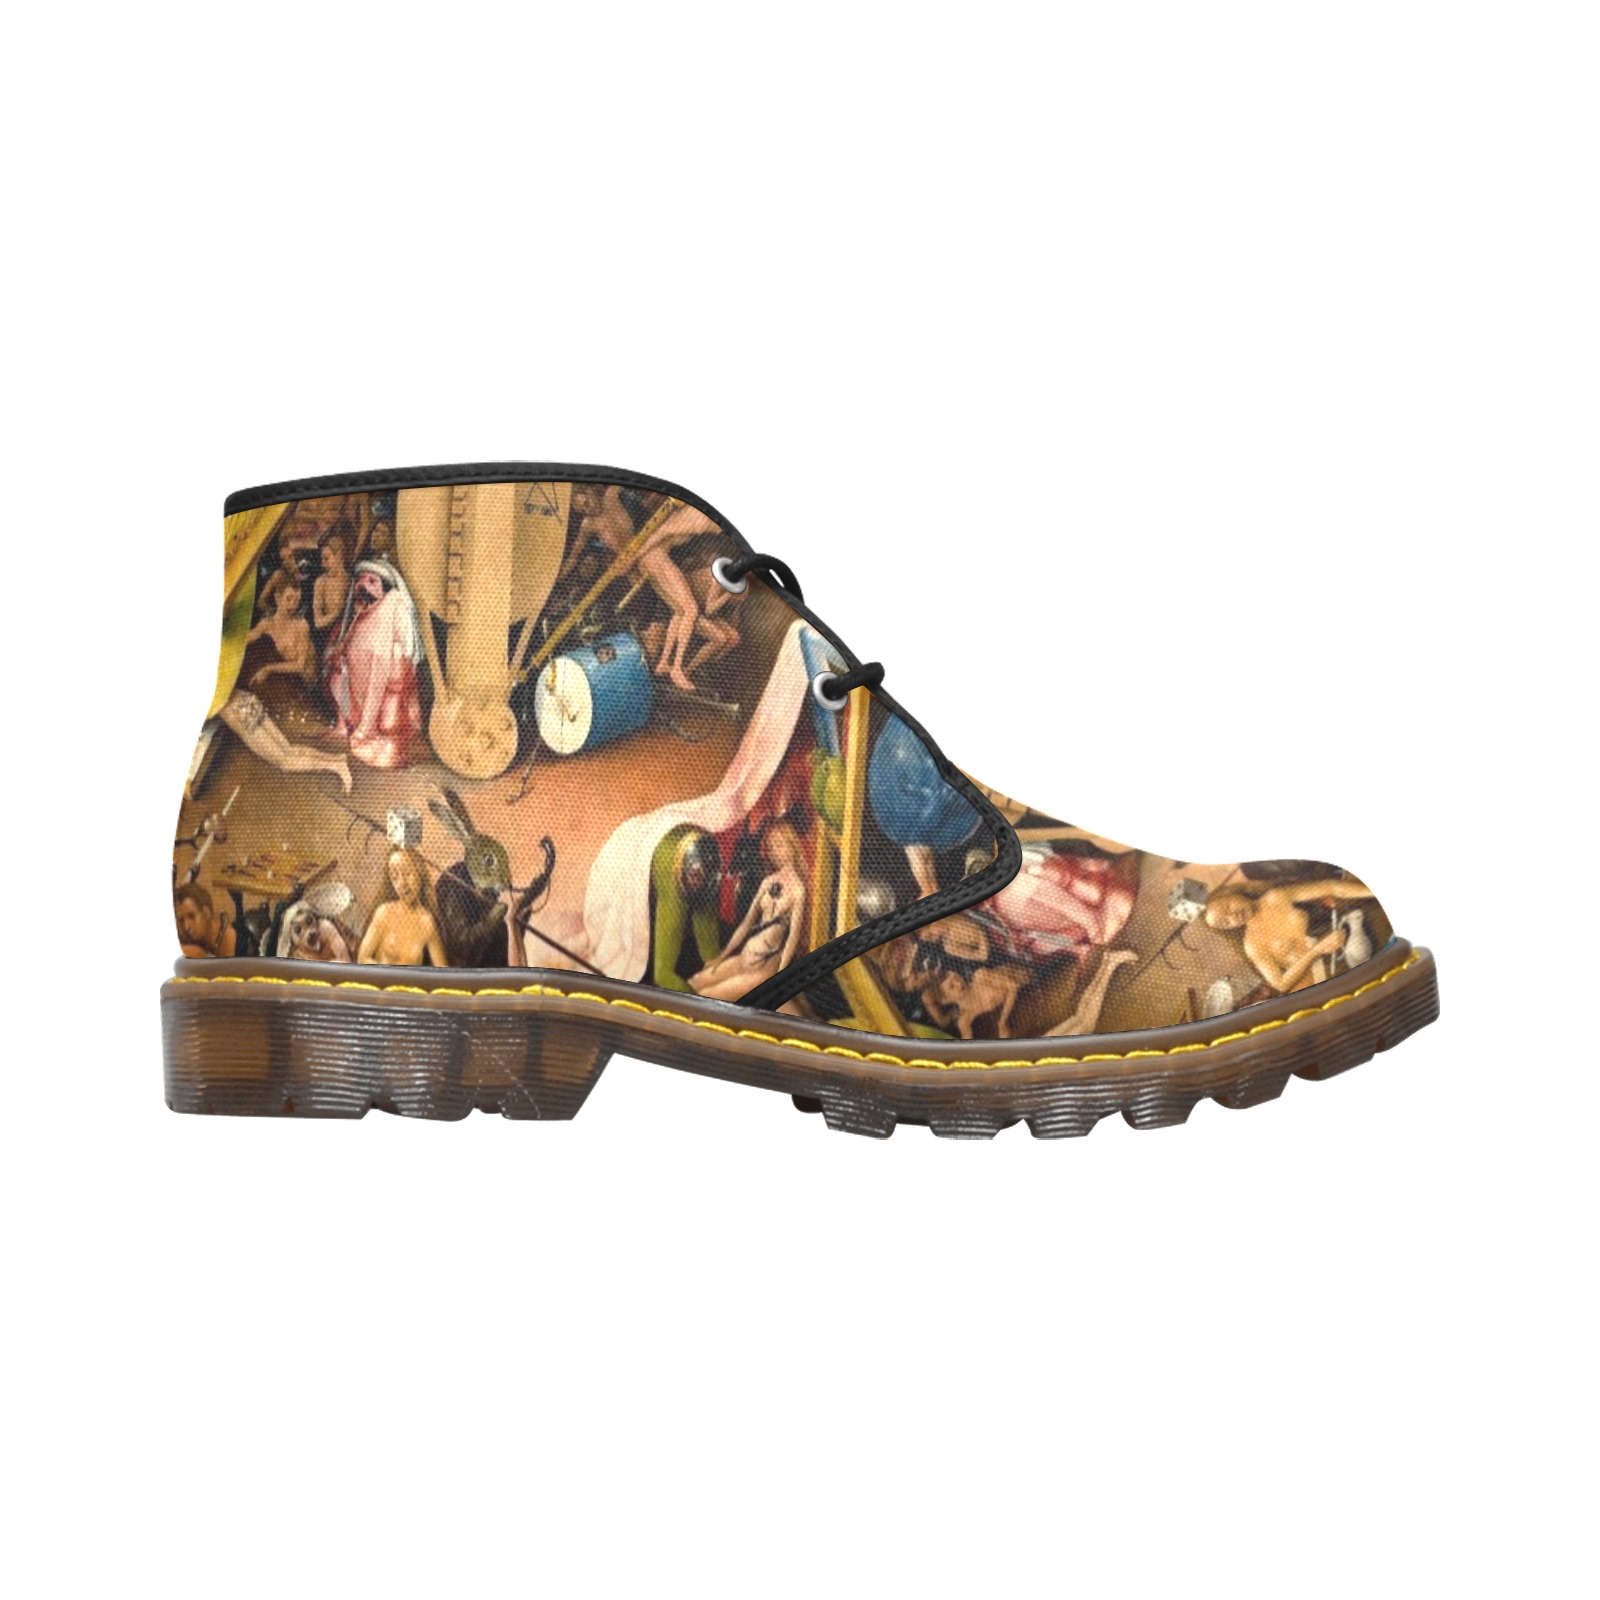 Garden of Earthly Delights 3 Women's Canvas Chukka Boots (Model 2402-1)